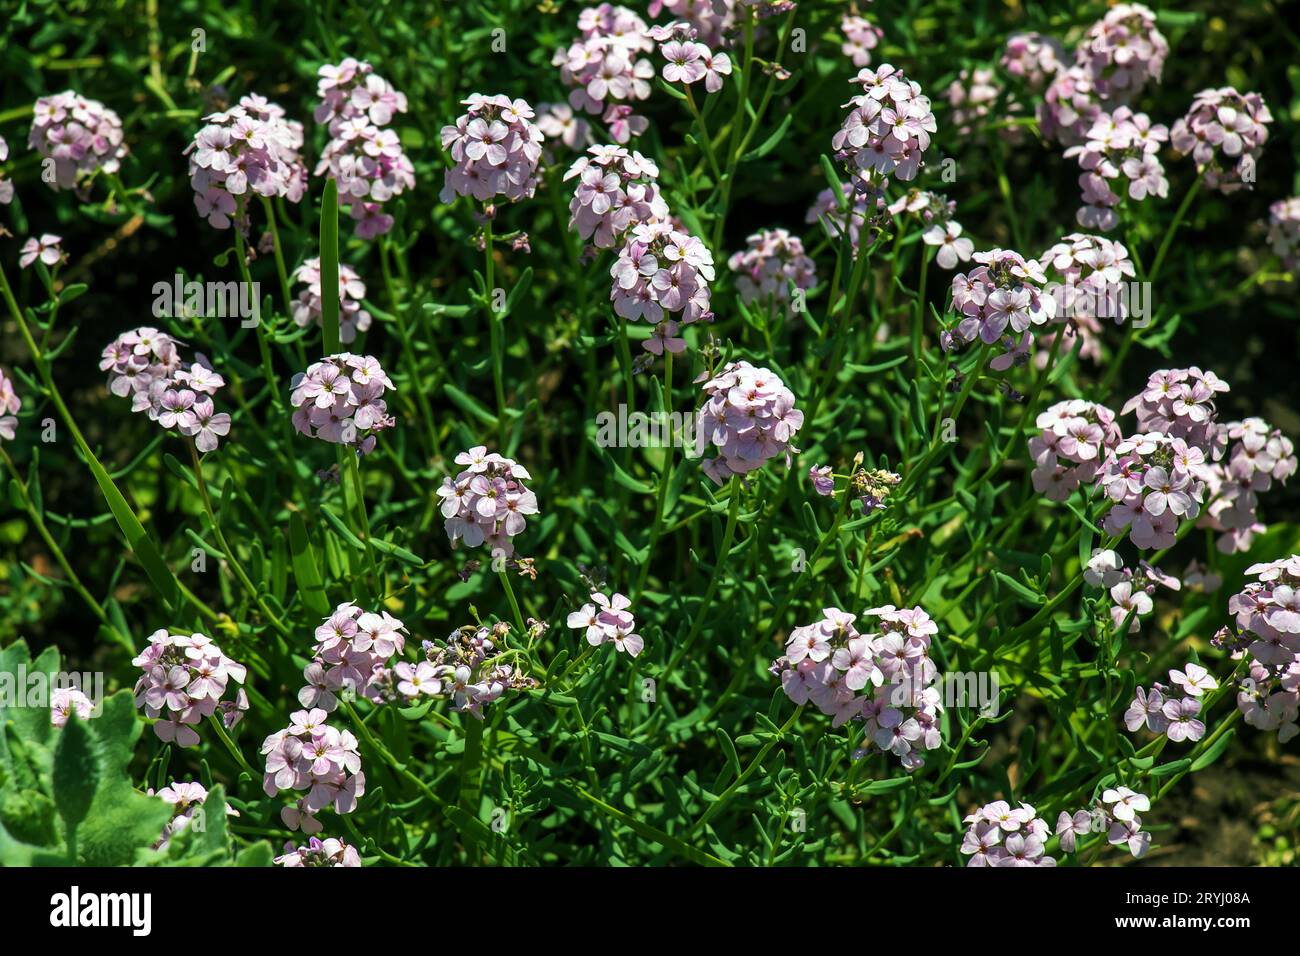 Persian cress or Persian flowers Aethionema grandiflorum blooms in the garden. Stock Photo